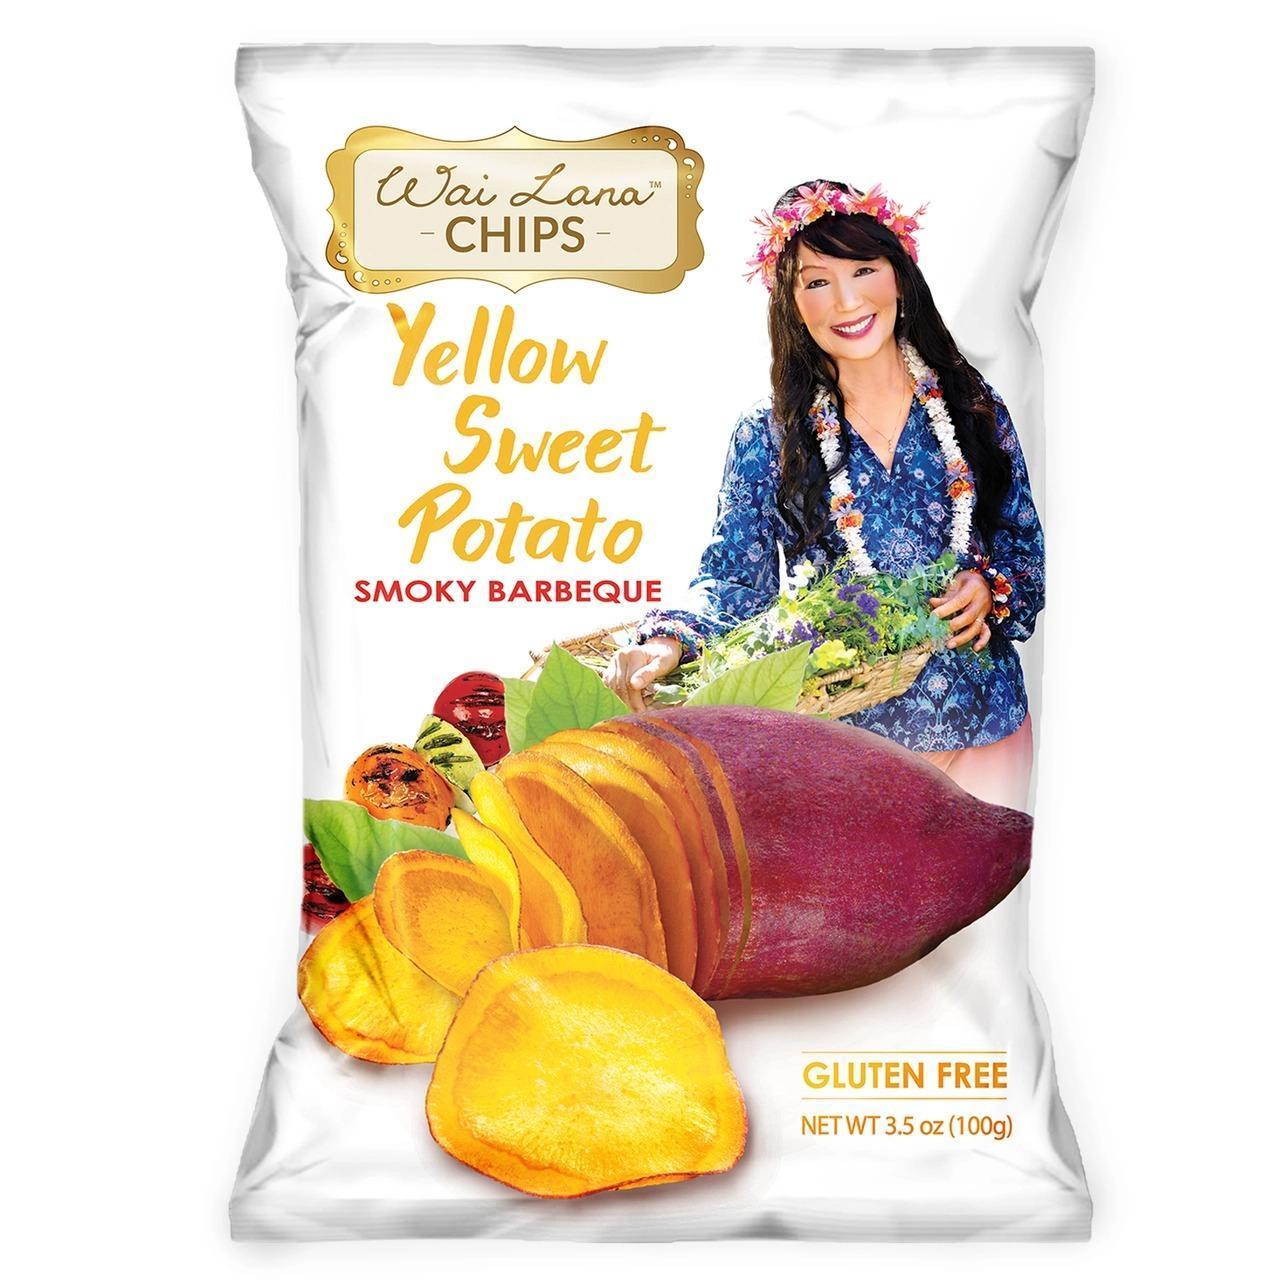 Wai Lana Smokey Barbeque Yellow Sweet Potato Chips